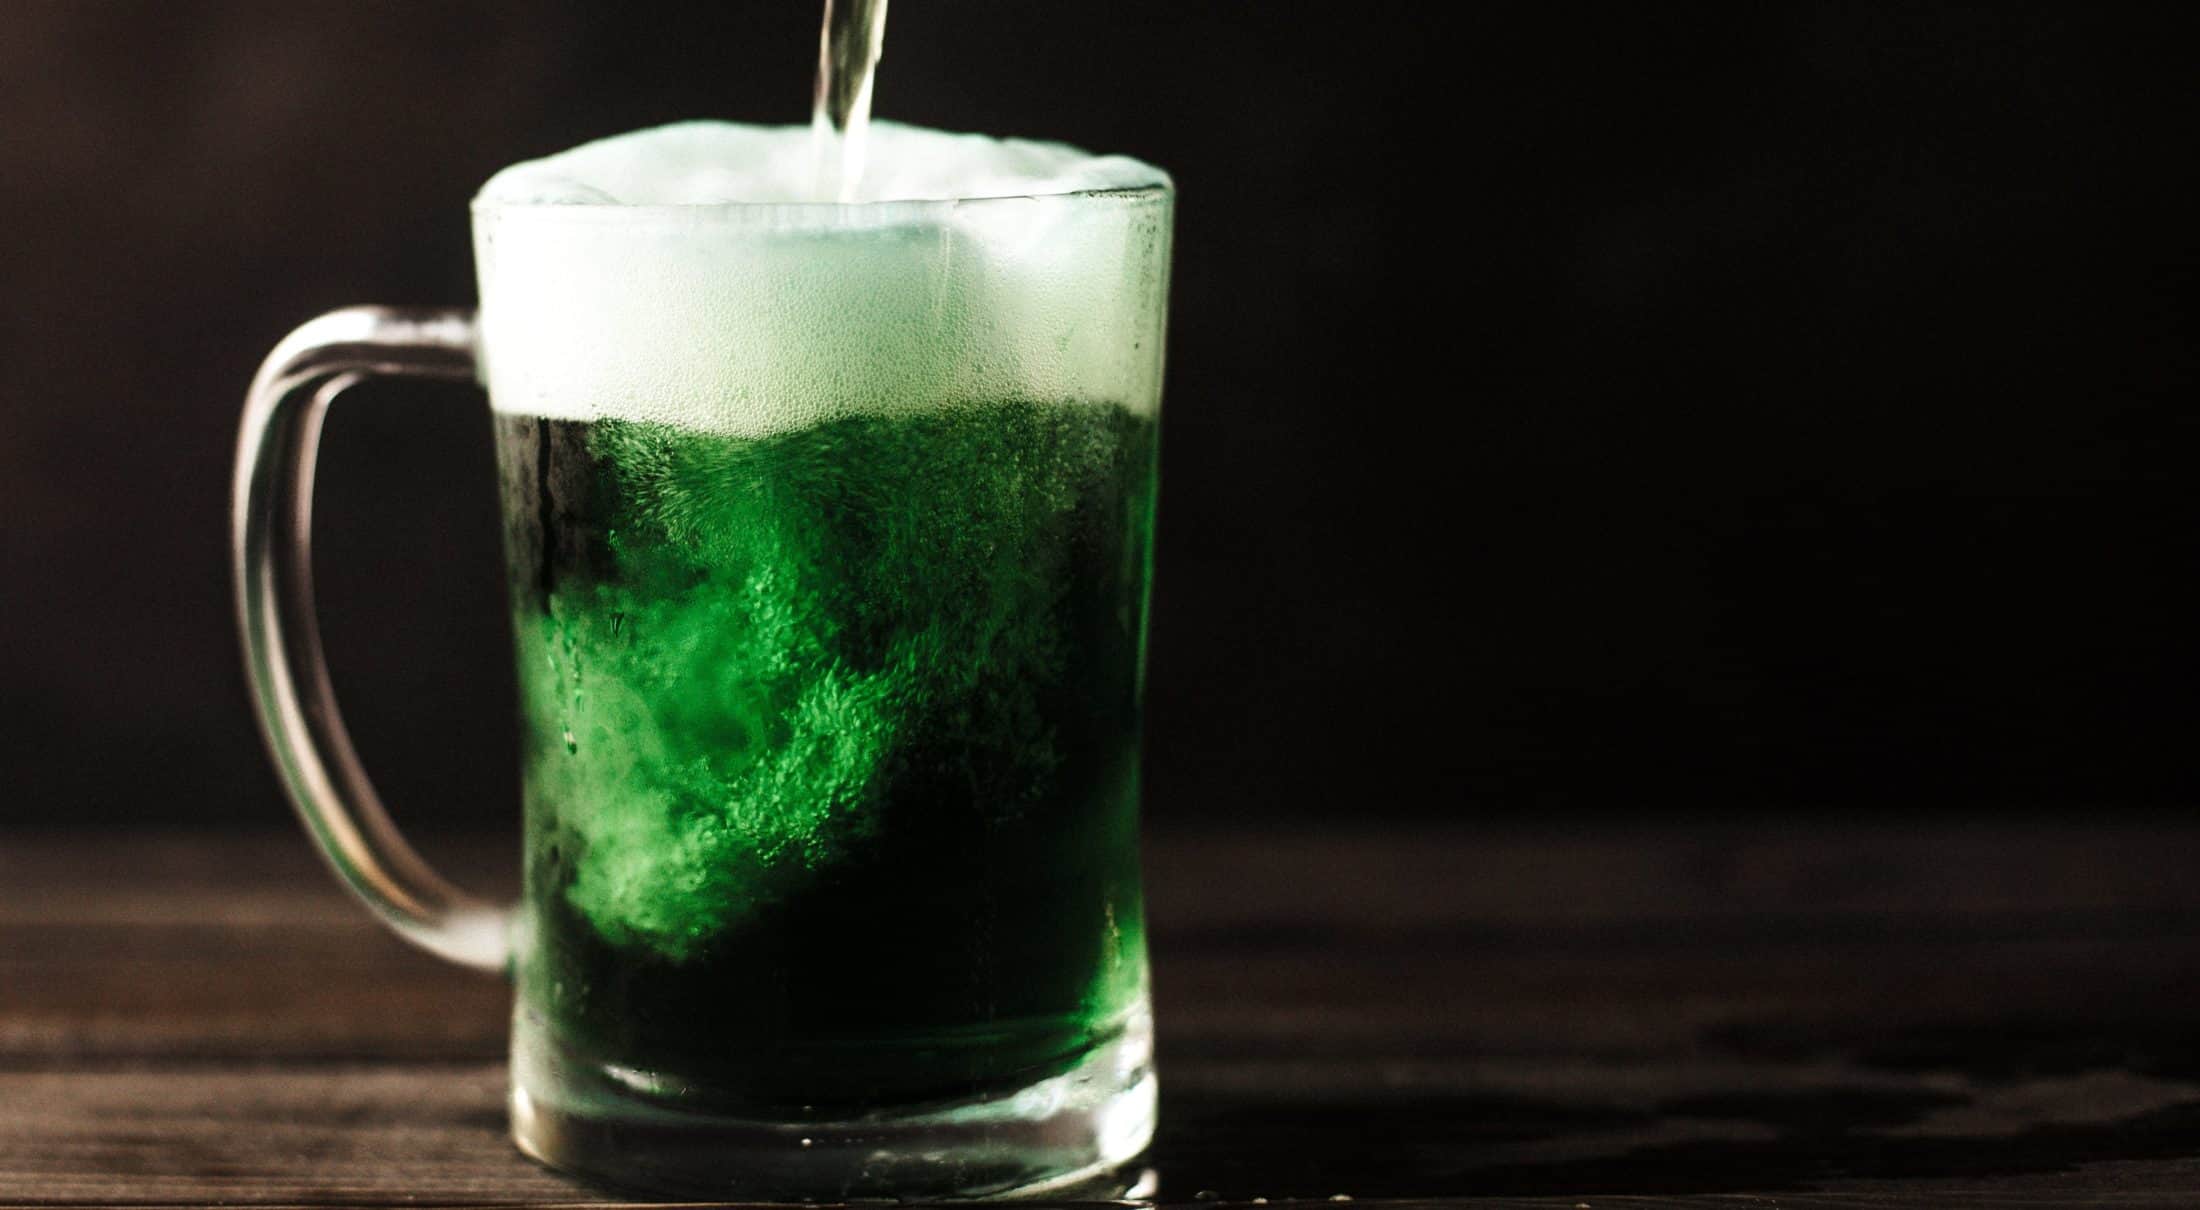 Green Beer to symbolize st patricks day celebration at The Kensington Falls church